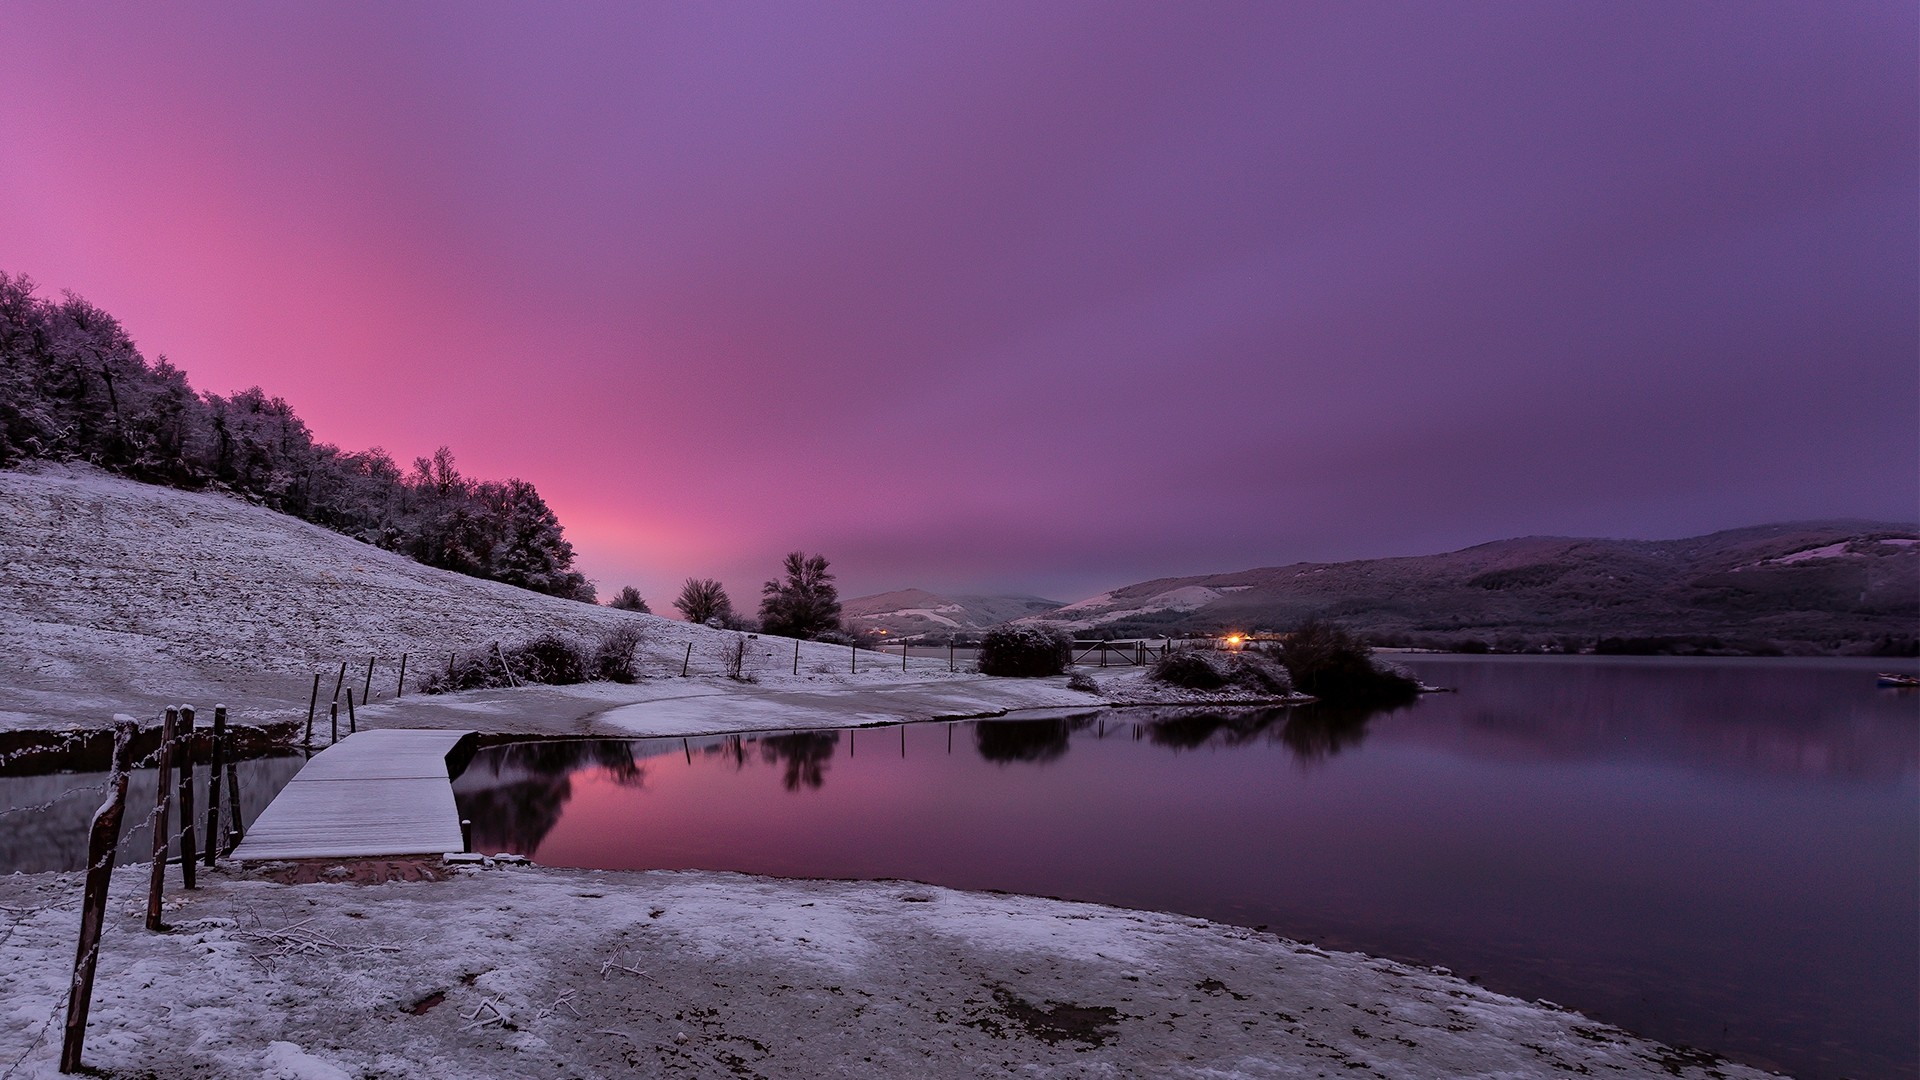  Winter  Sunset  HD Wallpaper Background Image 1920x1080 